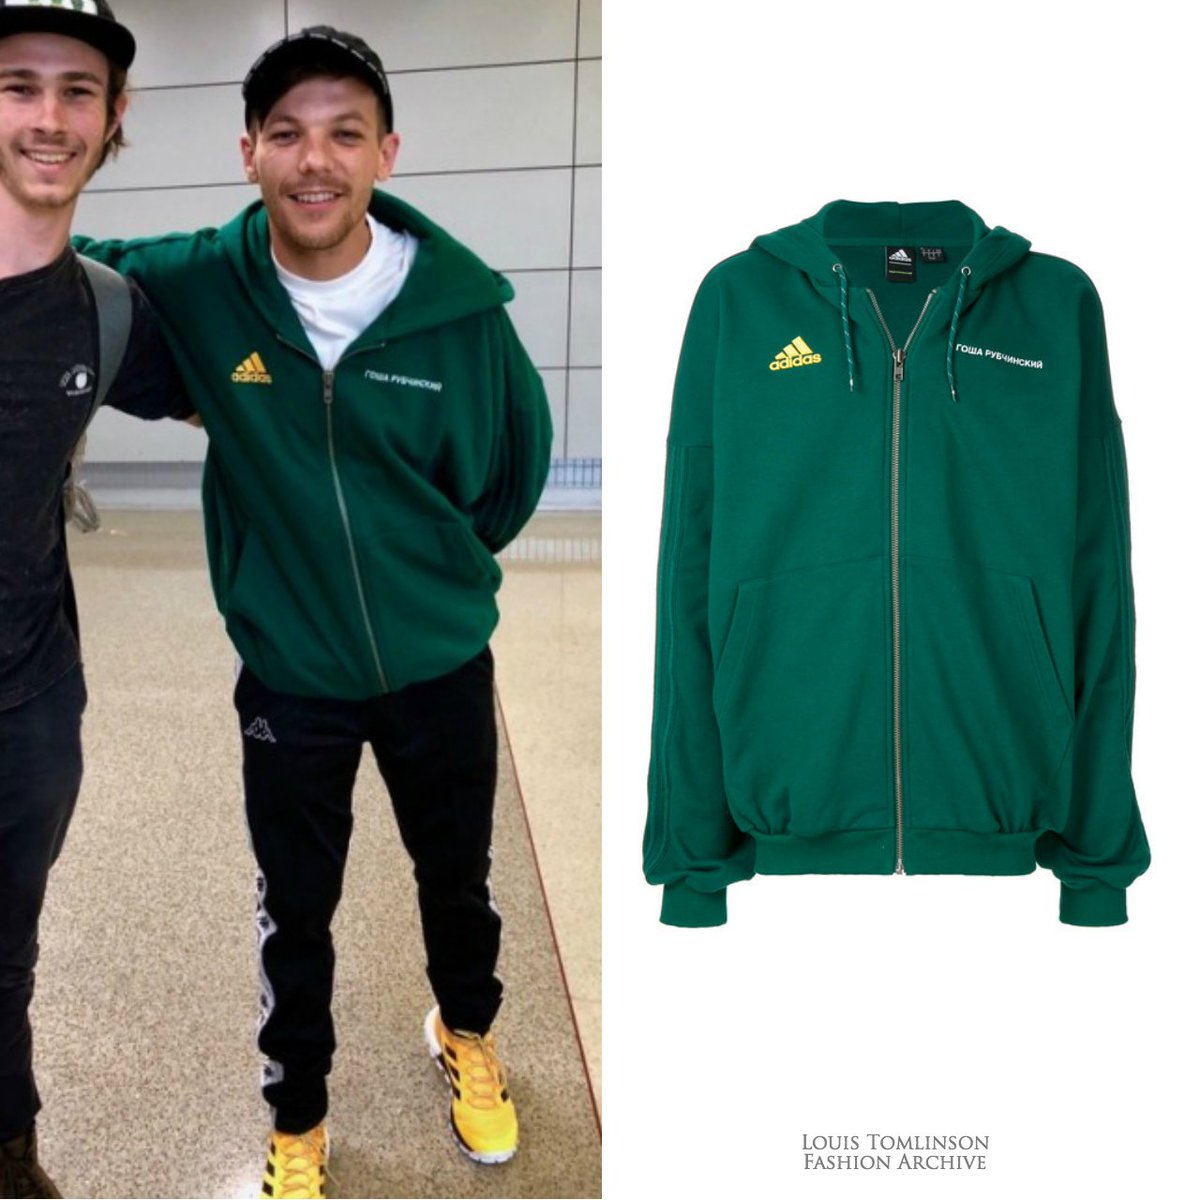 Schots tijdschrift Faeröer Louis Tomlinson Fashion Archive on Twitter: "06/24/18* | Louis wore a  #GoshaRubchinskiy x @adidas zipped jacket ($278) in Philadelphia  https://t.co/GGJ2fg8CBK https://t.co/zZxkiucTU8" / Twitter